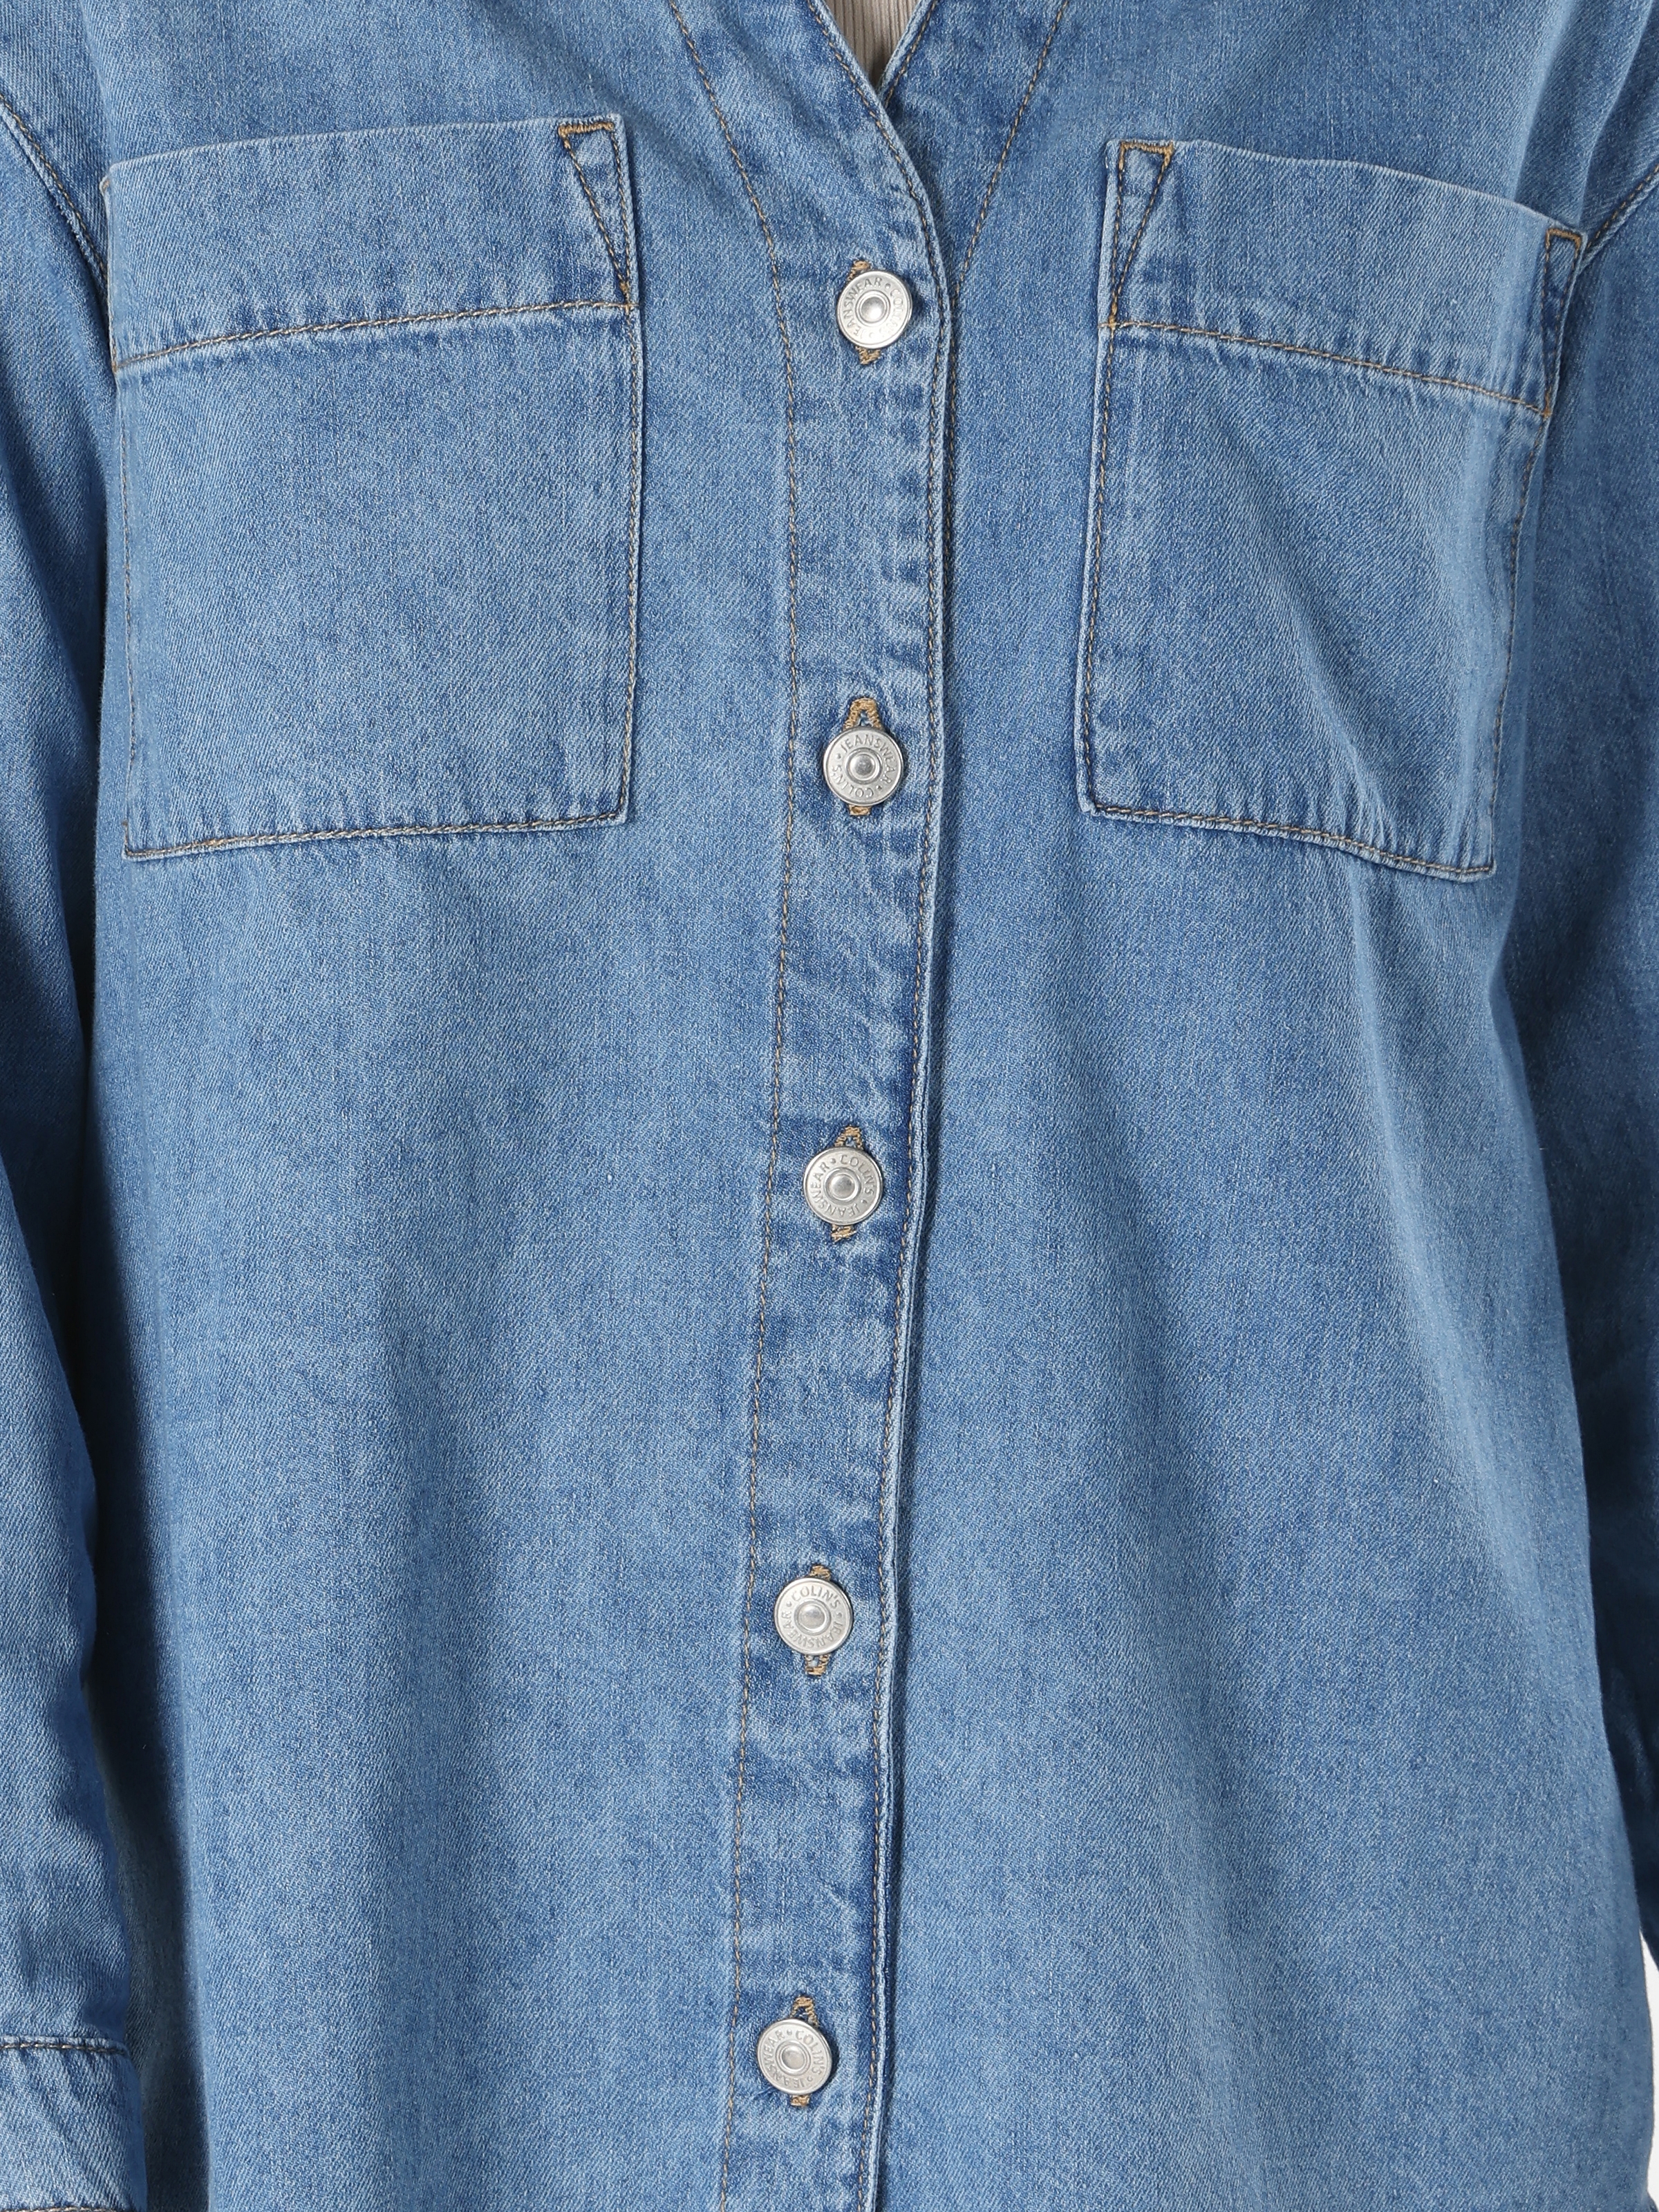 Afișați detalii pentru Camasa de blugi dama albastra cu maneca lunga